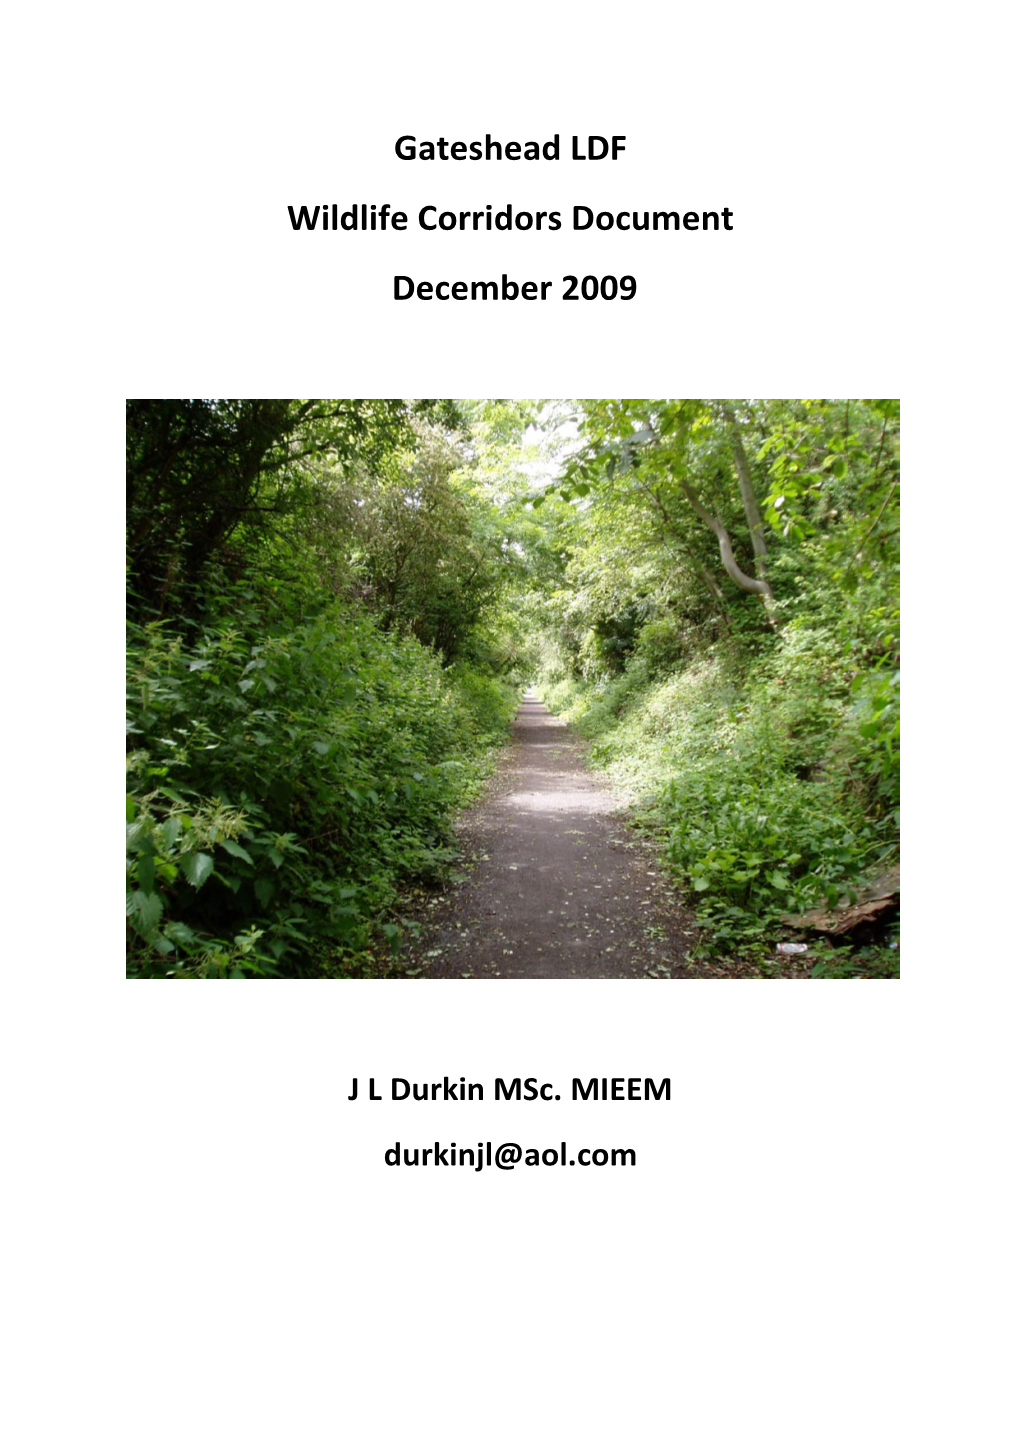 Gateshead LDF Wildlife Corridors Document December 2009